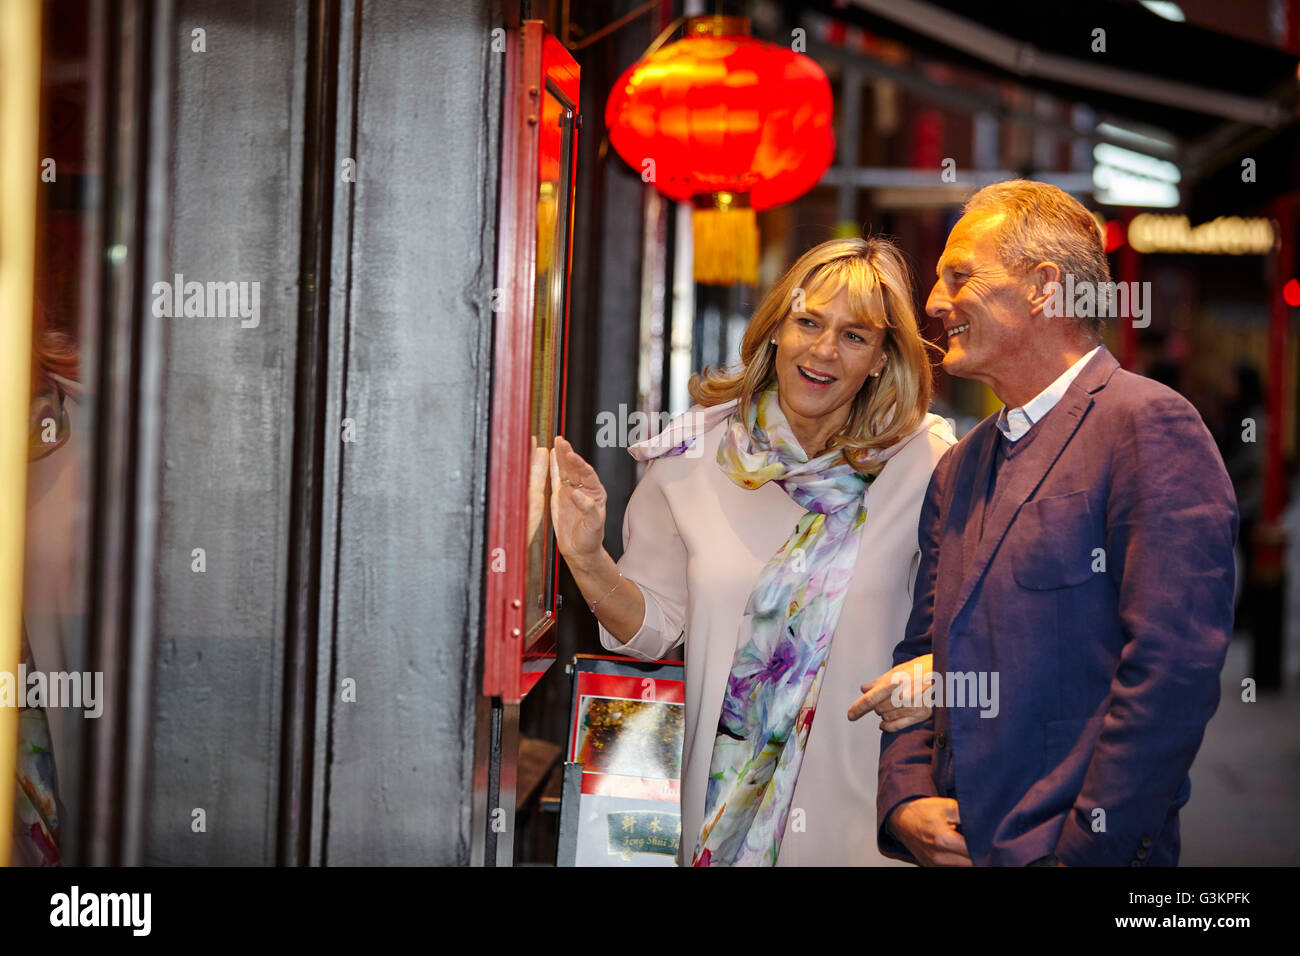 Mature dating couple reading restaurant menu in China Town, London, UK Stock Photo